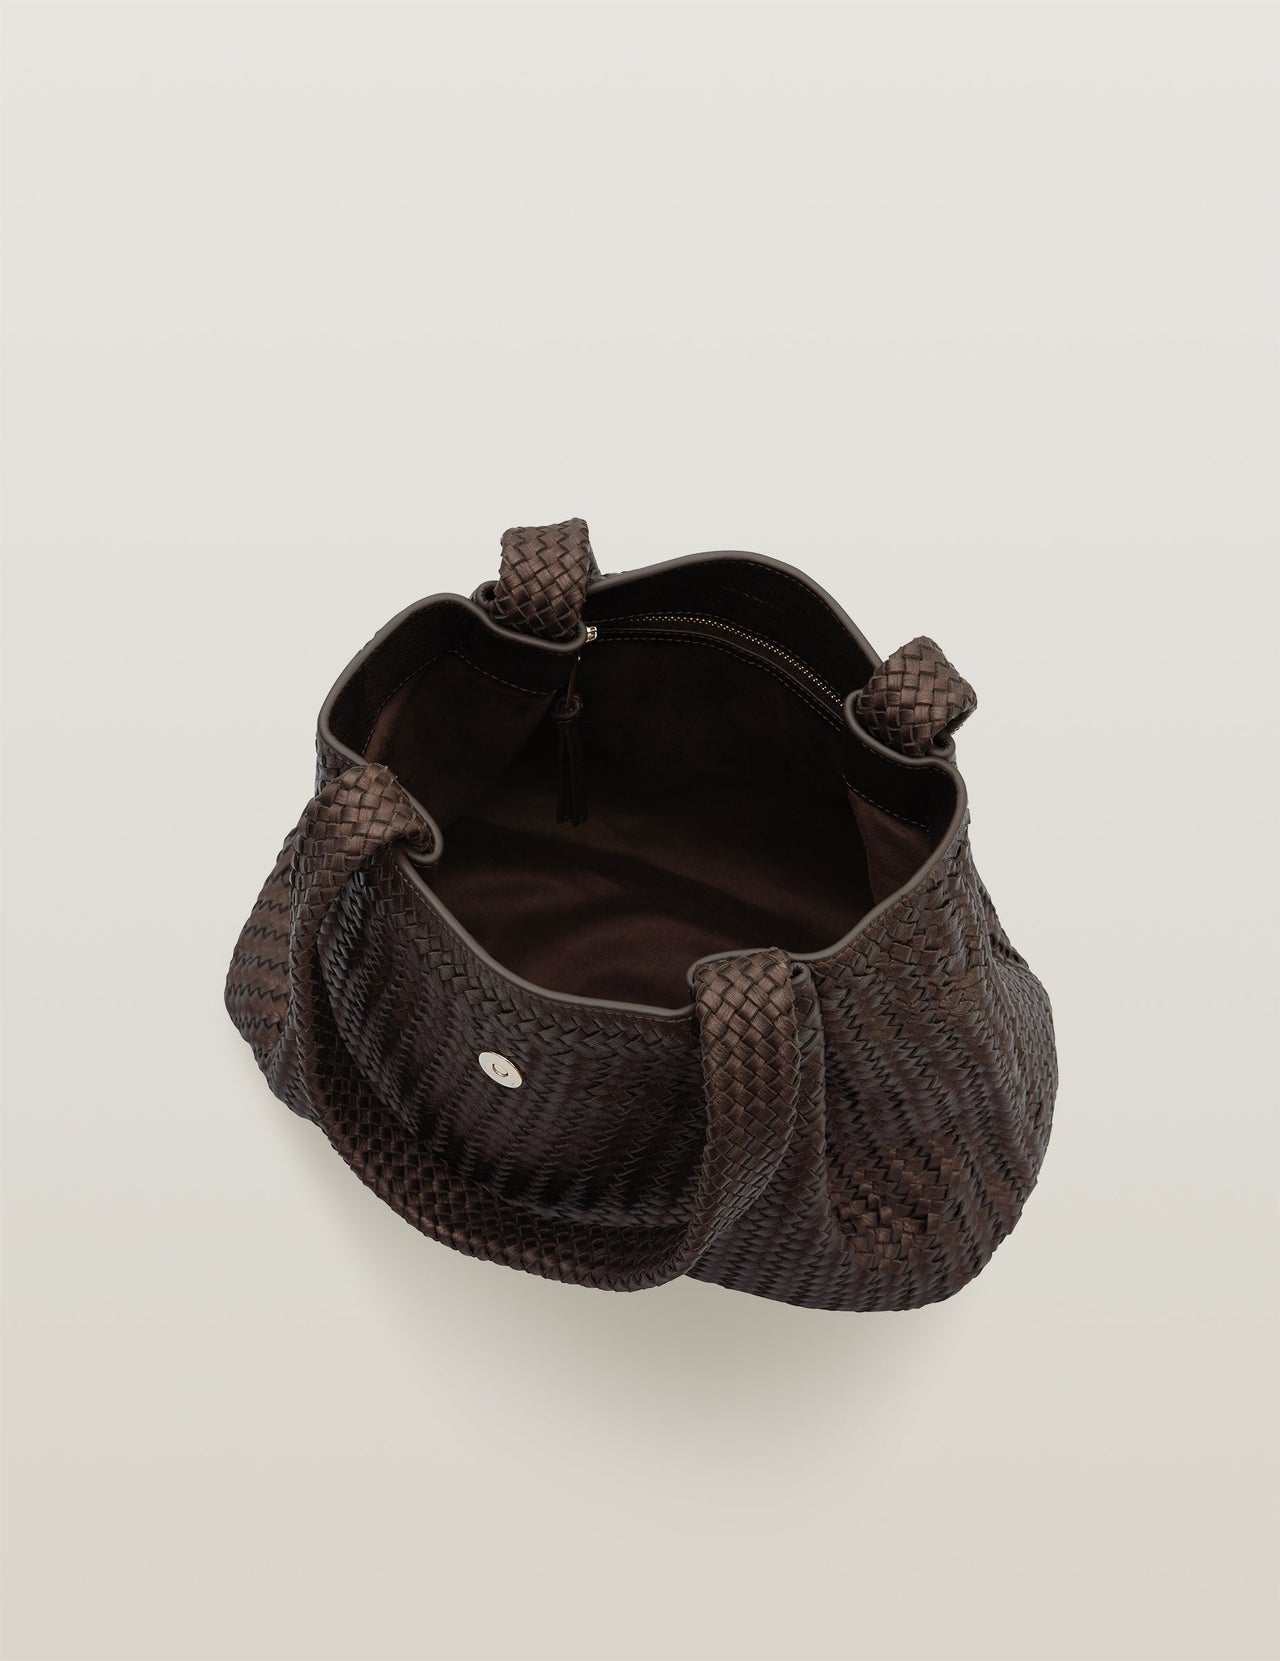  Metallic Brown Handwoven Large Leather Hobo Bag 